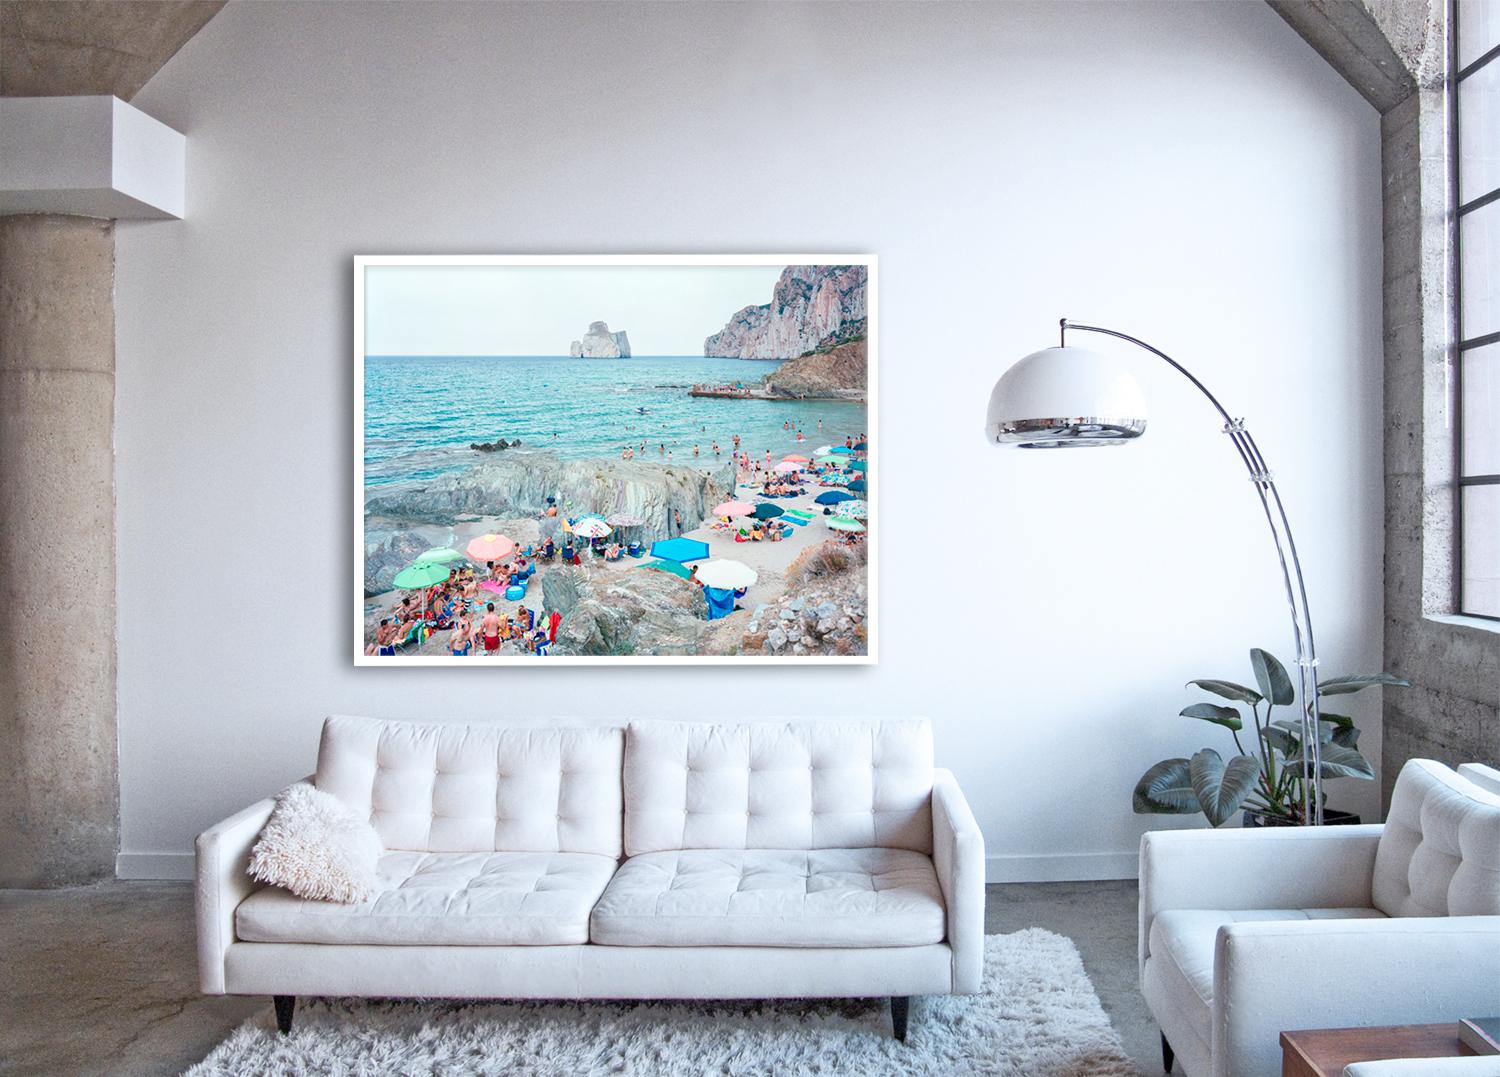 Pan di Zucchero - extra large scale photo of Mediterranean beach scene (framed)  - Photograph by Massimo Vitali